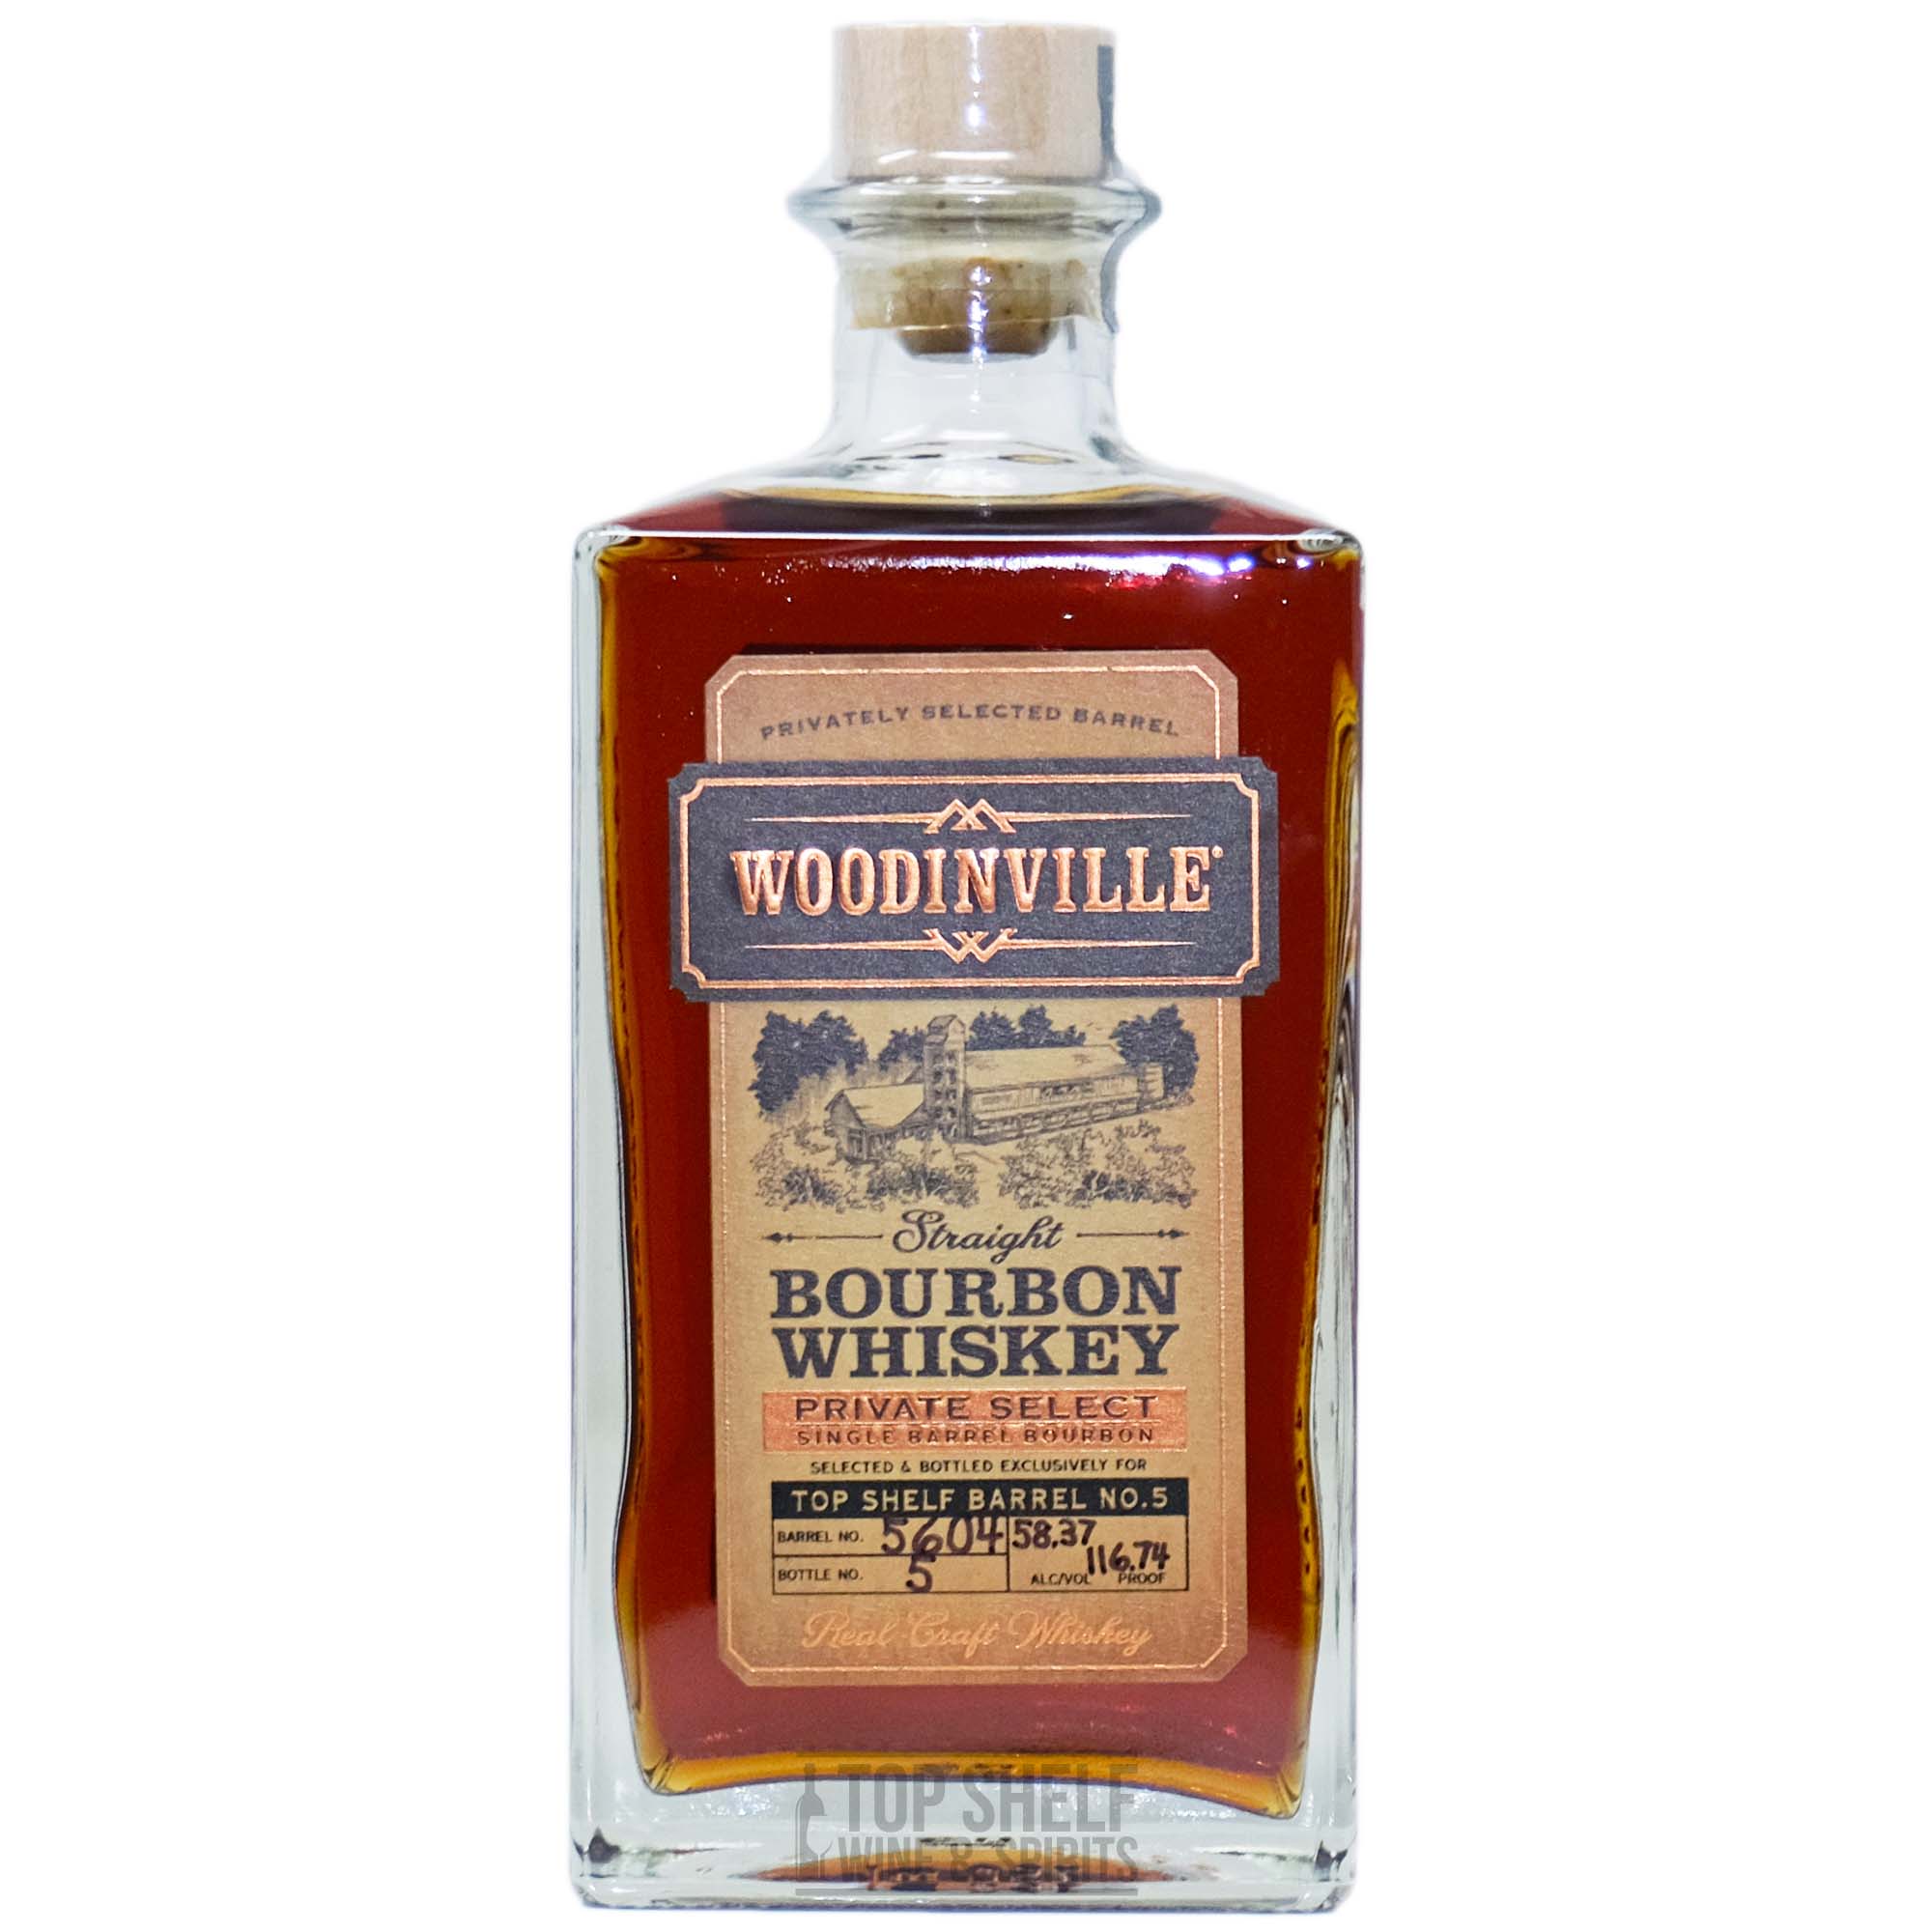 Woodinville Bourbon Single Barrel Cask Strength Barrel 5604 (Private Selection)